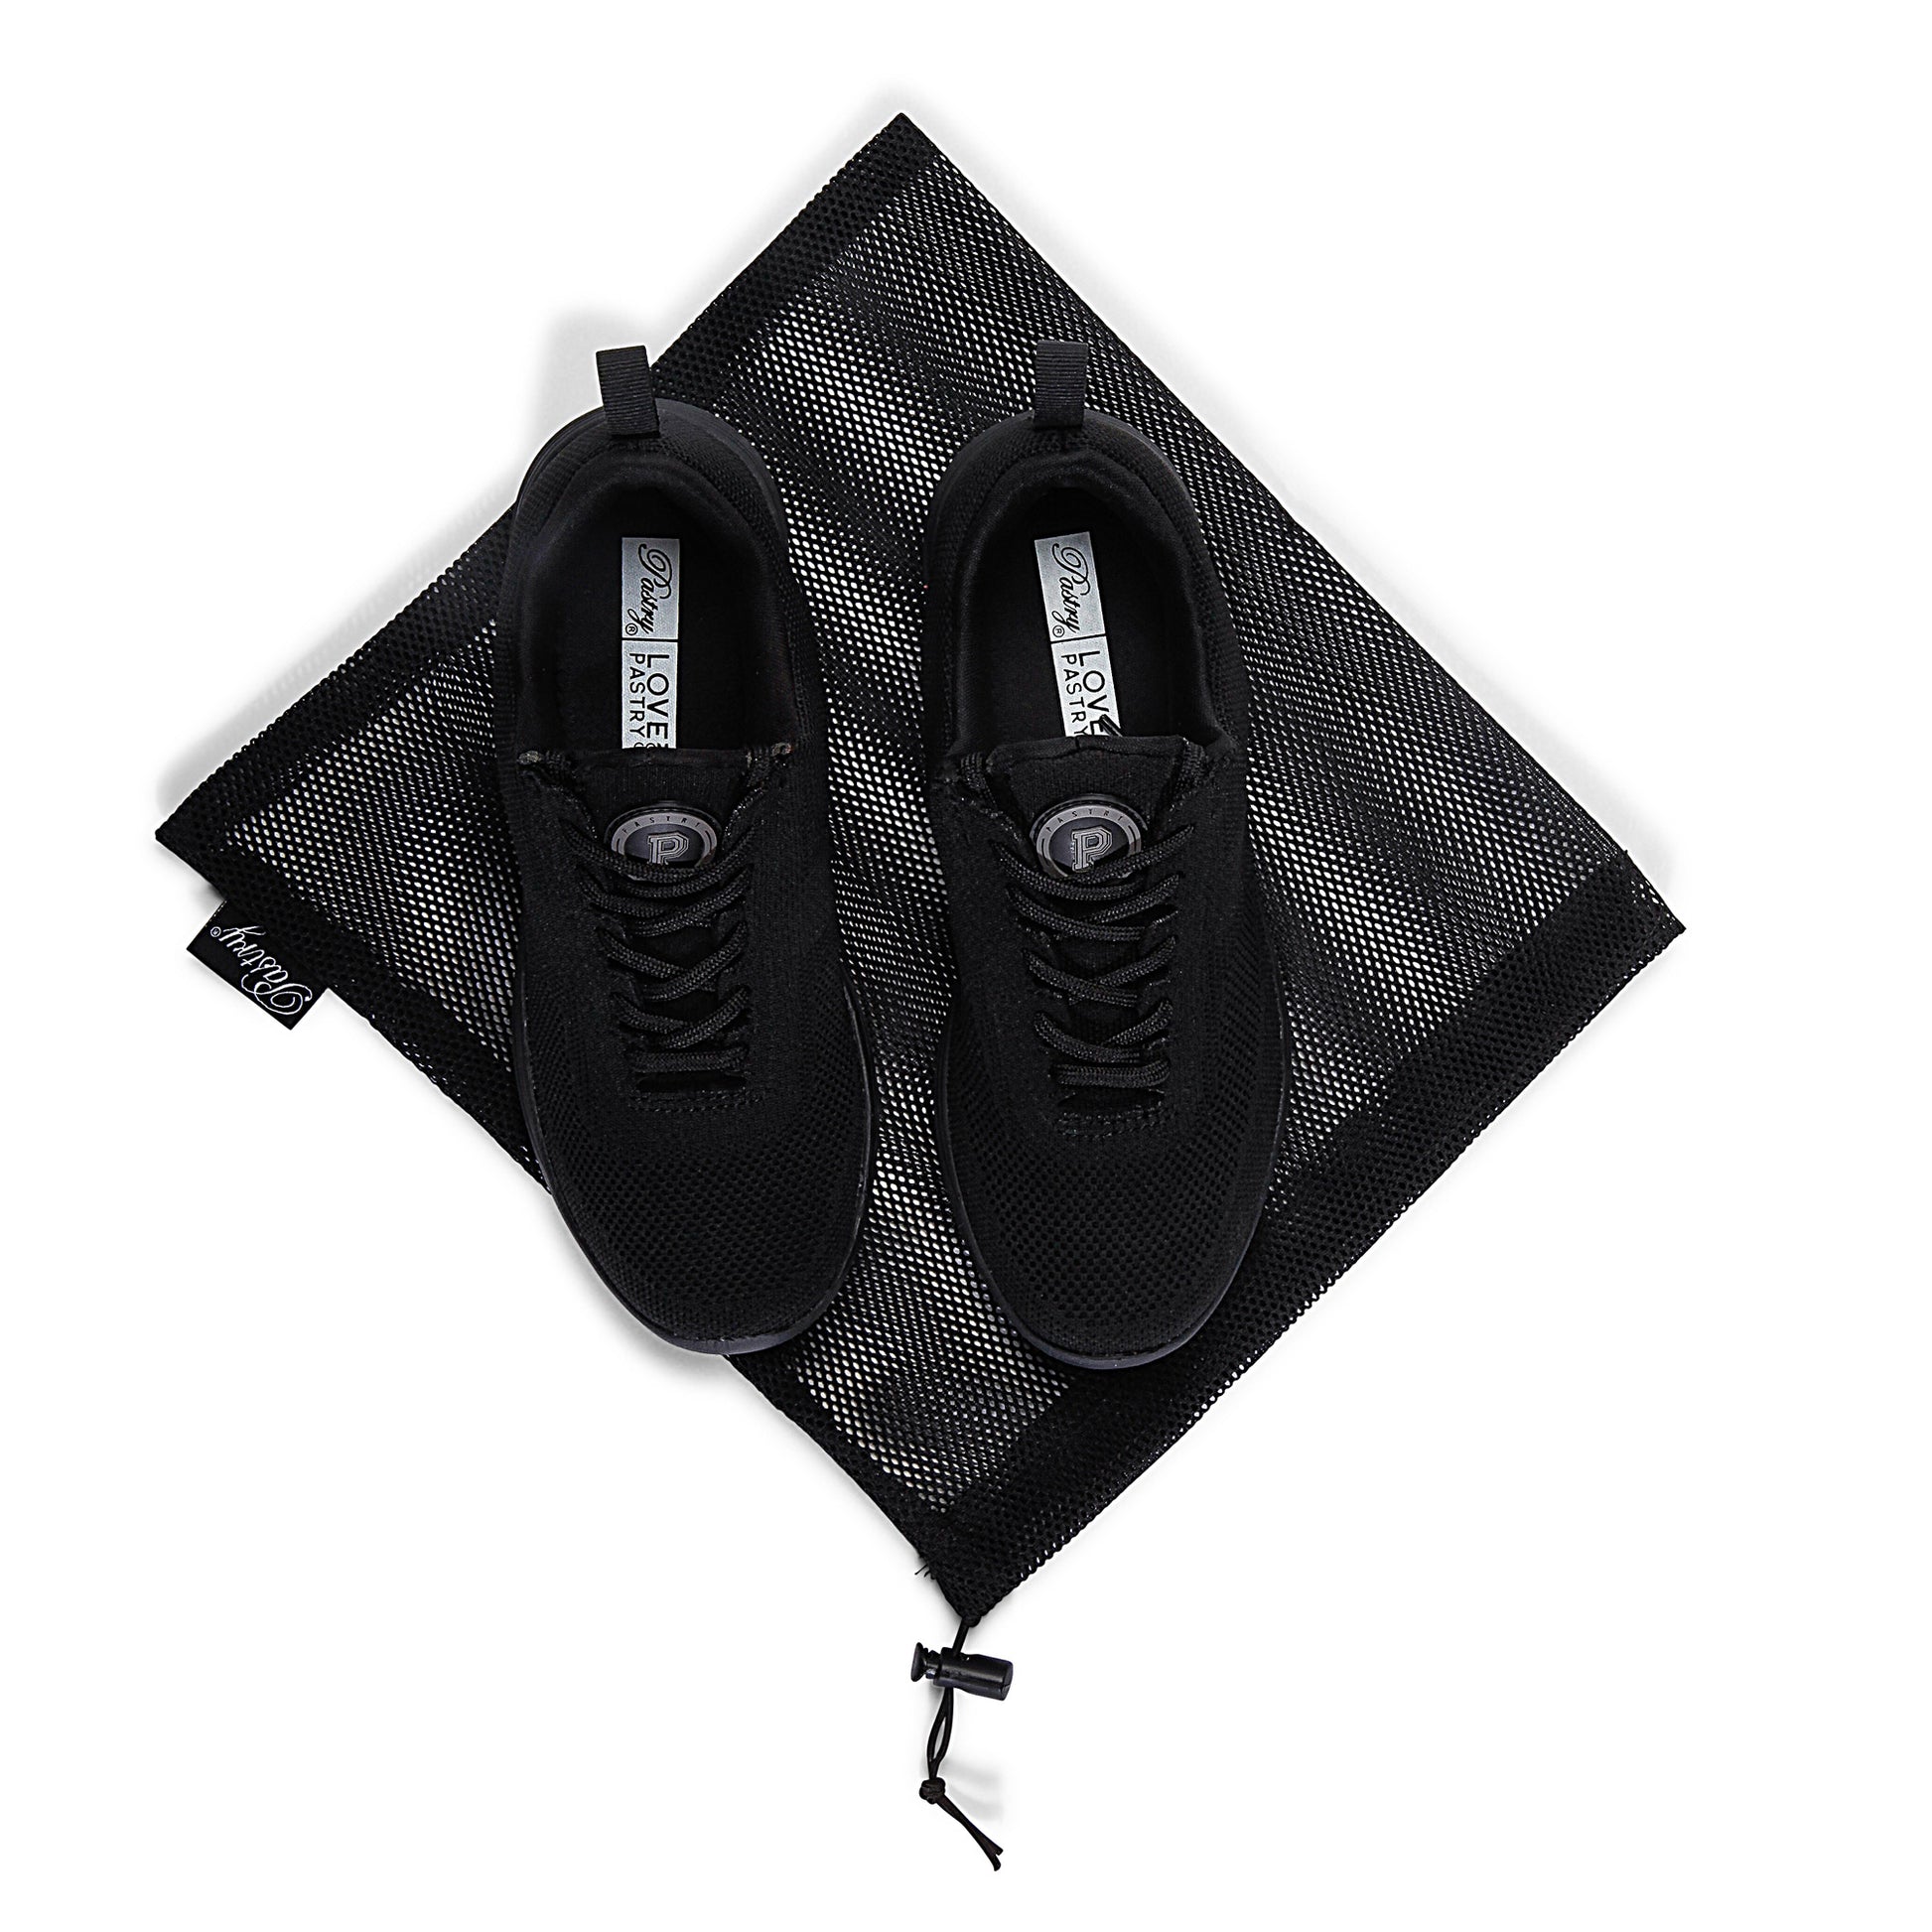 Pair of Pastry Studio TR2 Adult Women's Sneaker in Black/Black with bag